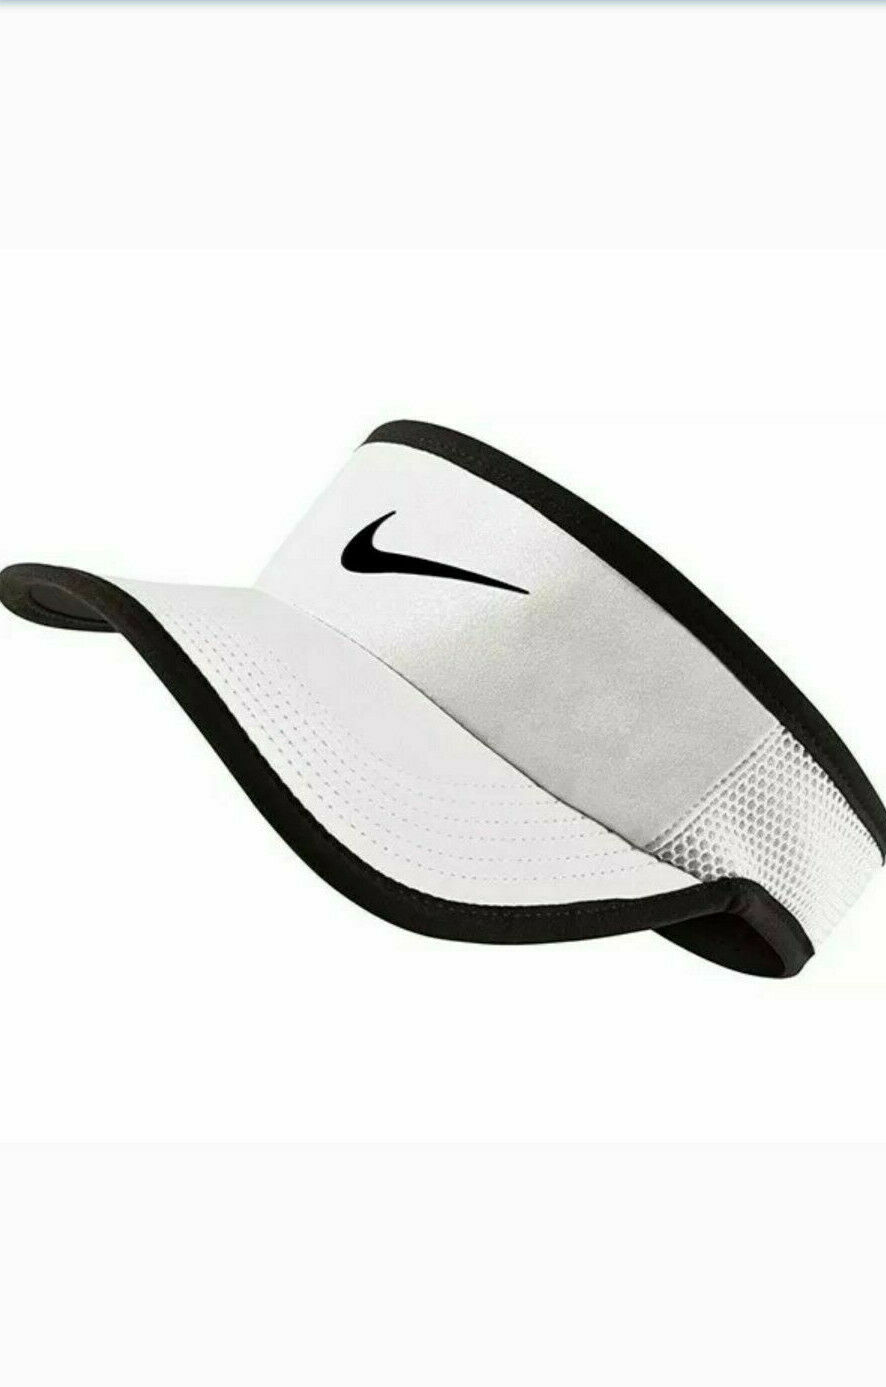 Verstrooien pols in beroep gaan Nike [M/L] Adult Unisex Aerobill Featherlight Tennis Visor-White/Black  744957-100 – VALLEYSPORTING